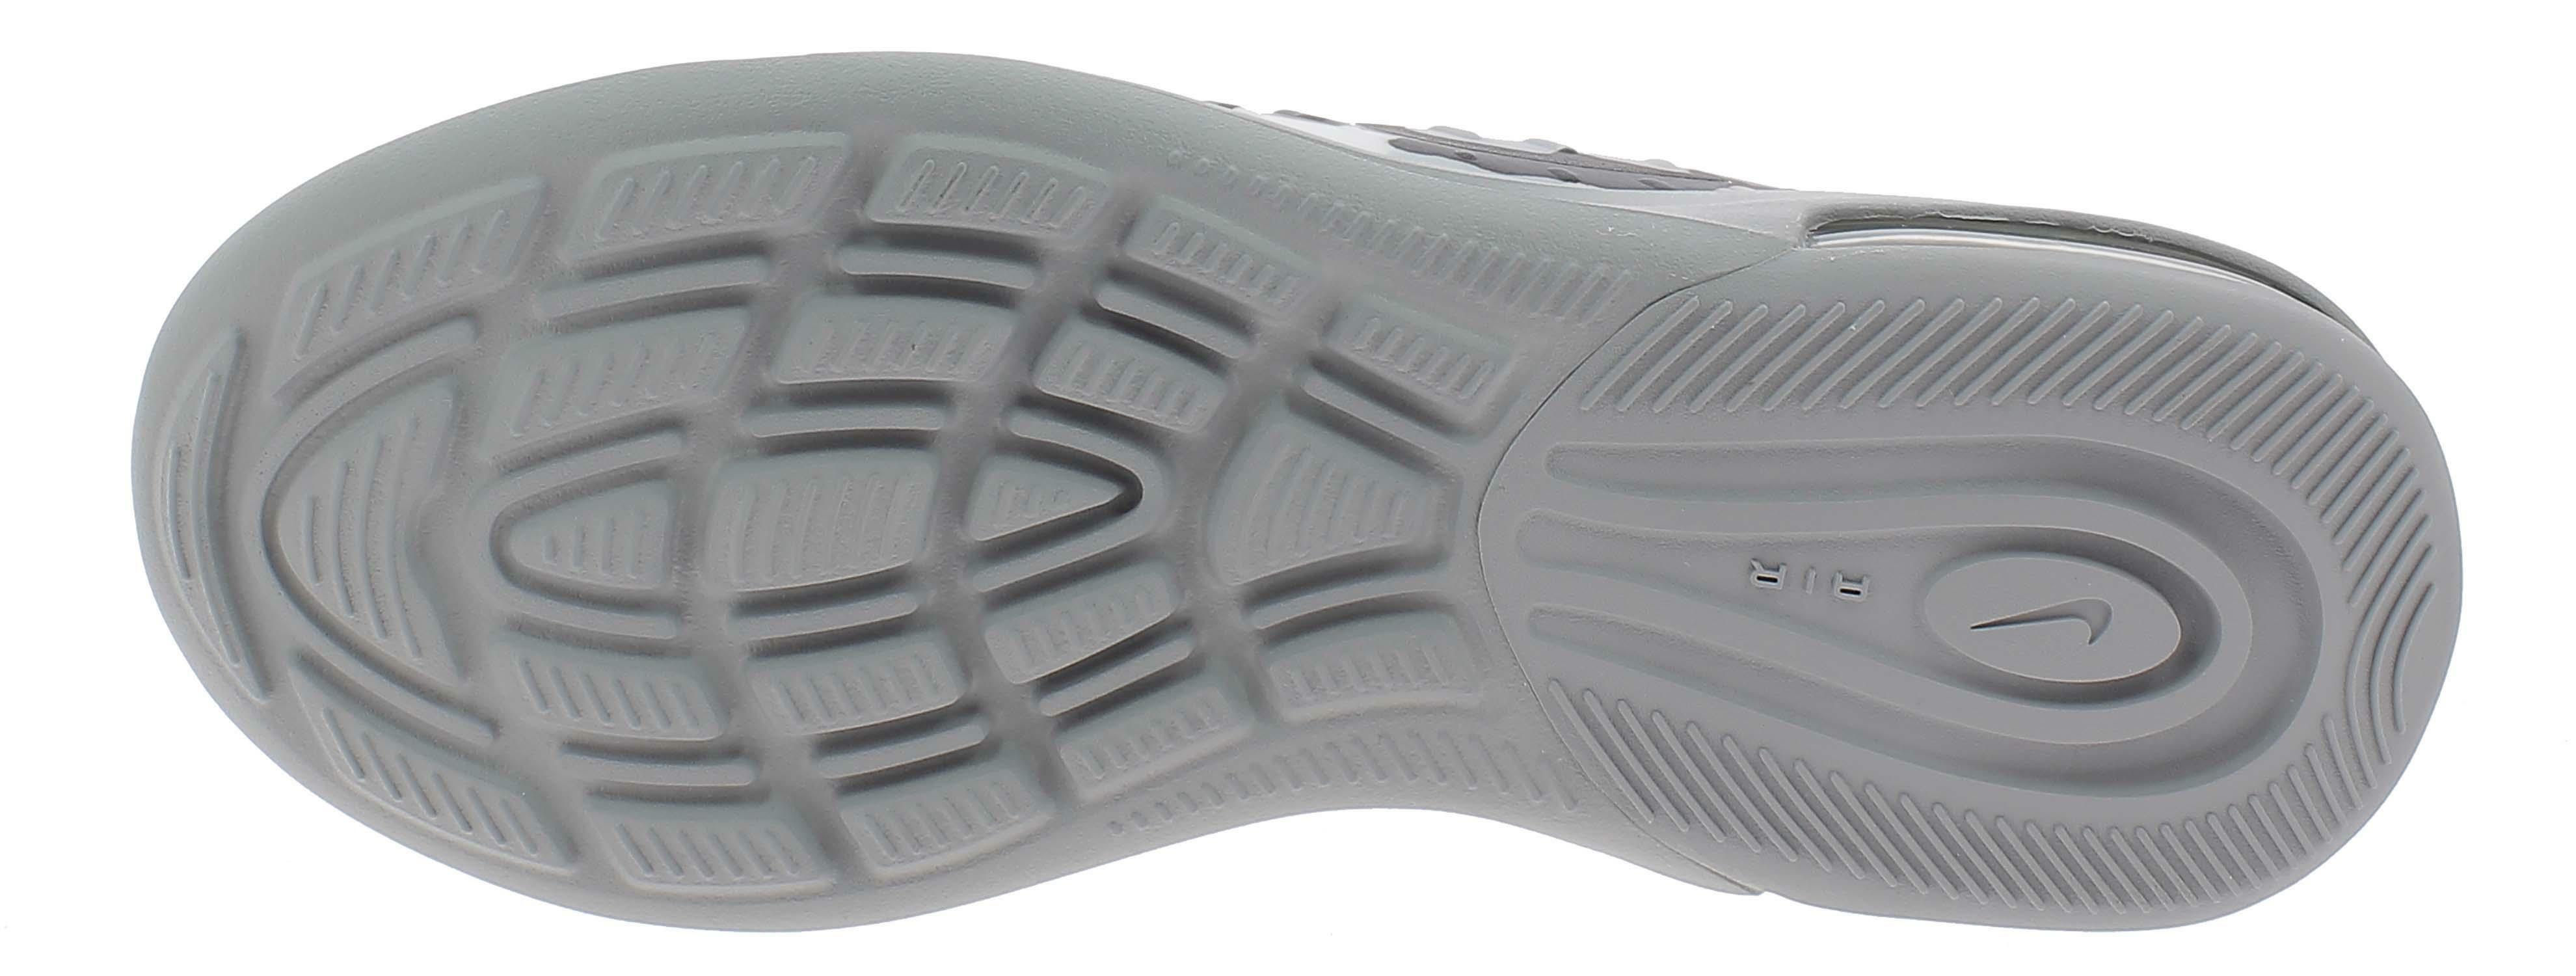 nike nike air max axis gs scarpe sportive bambino grigie camouflage aq9603002